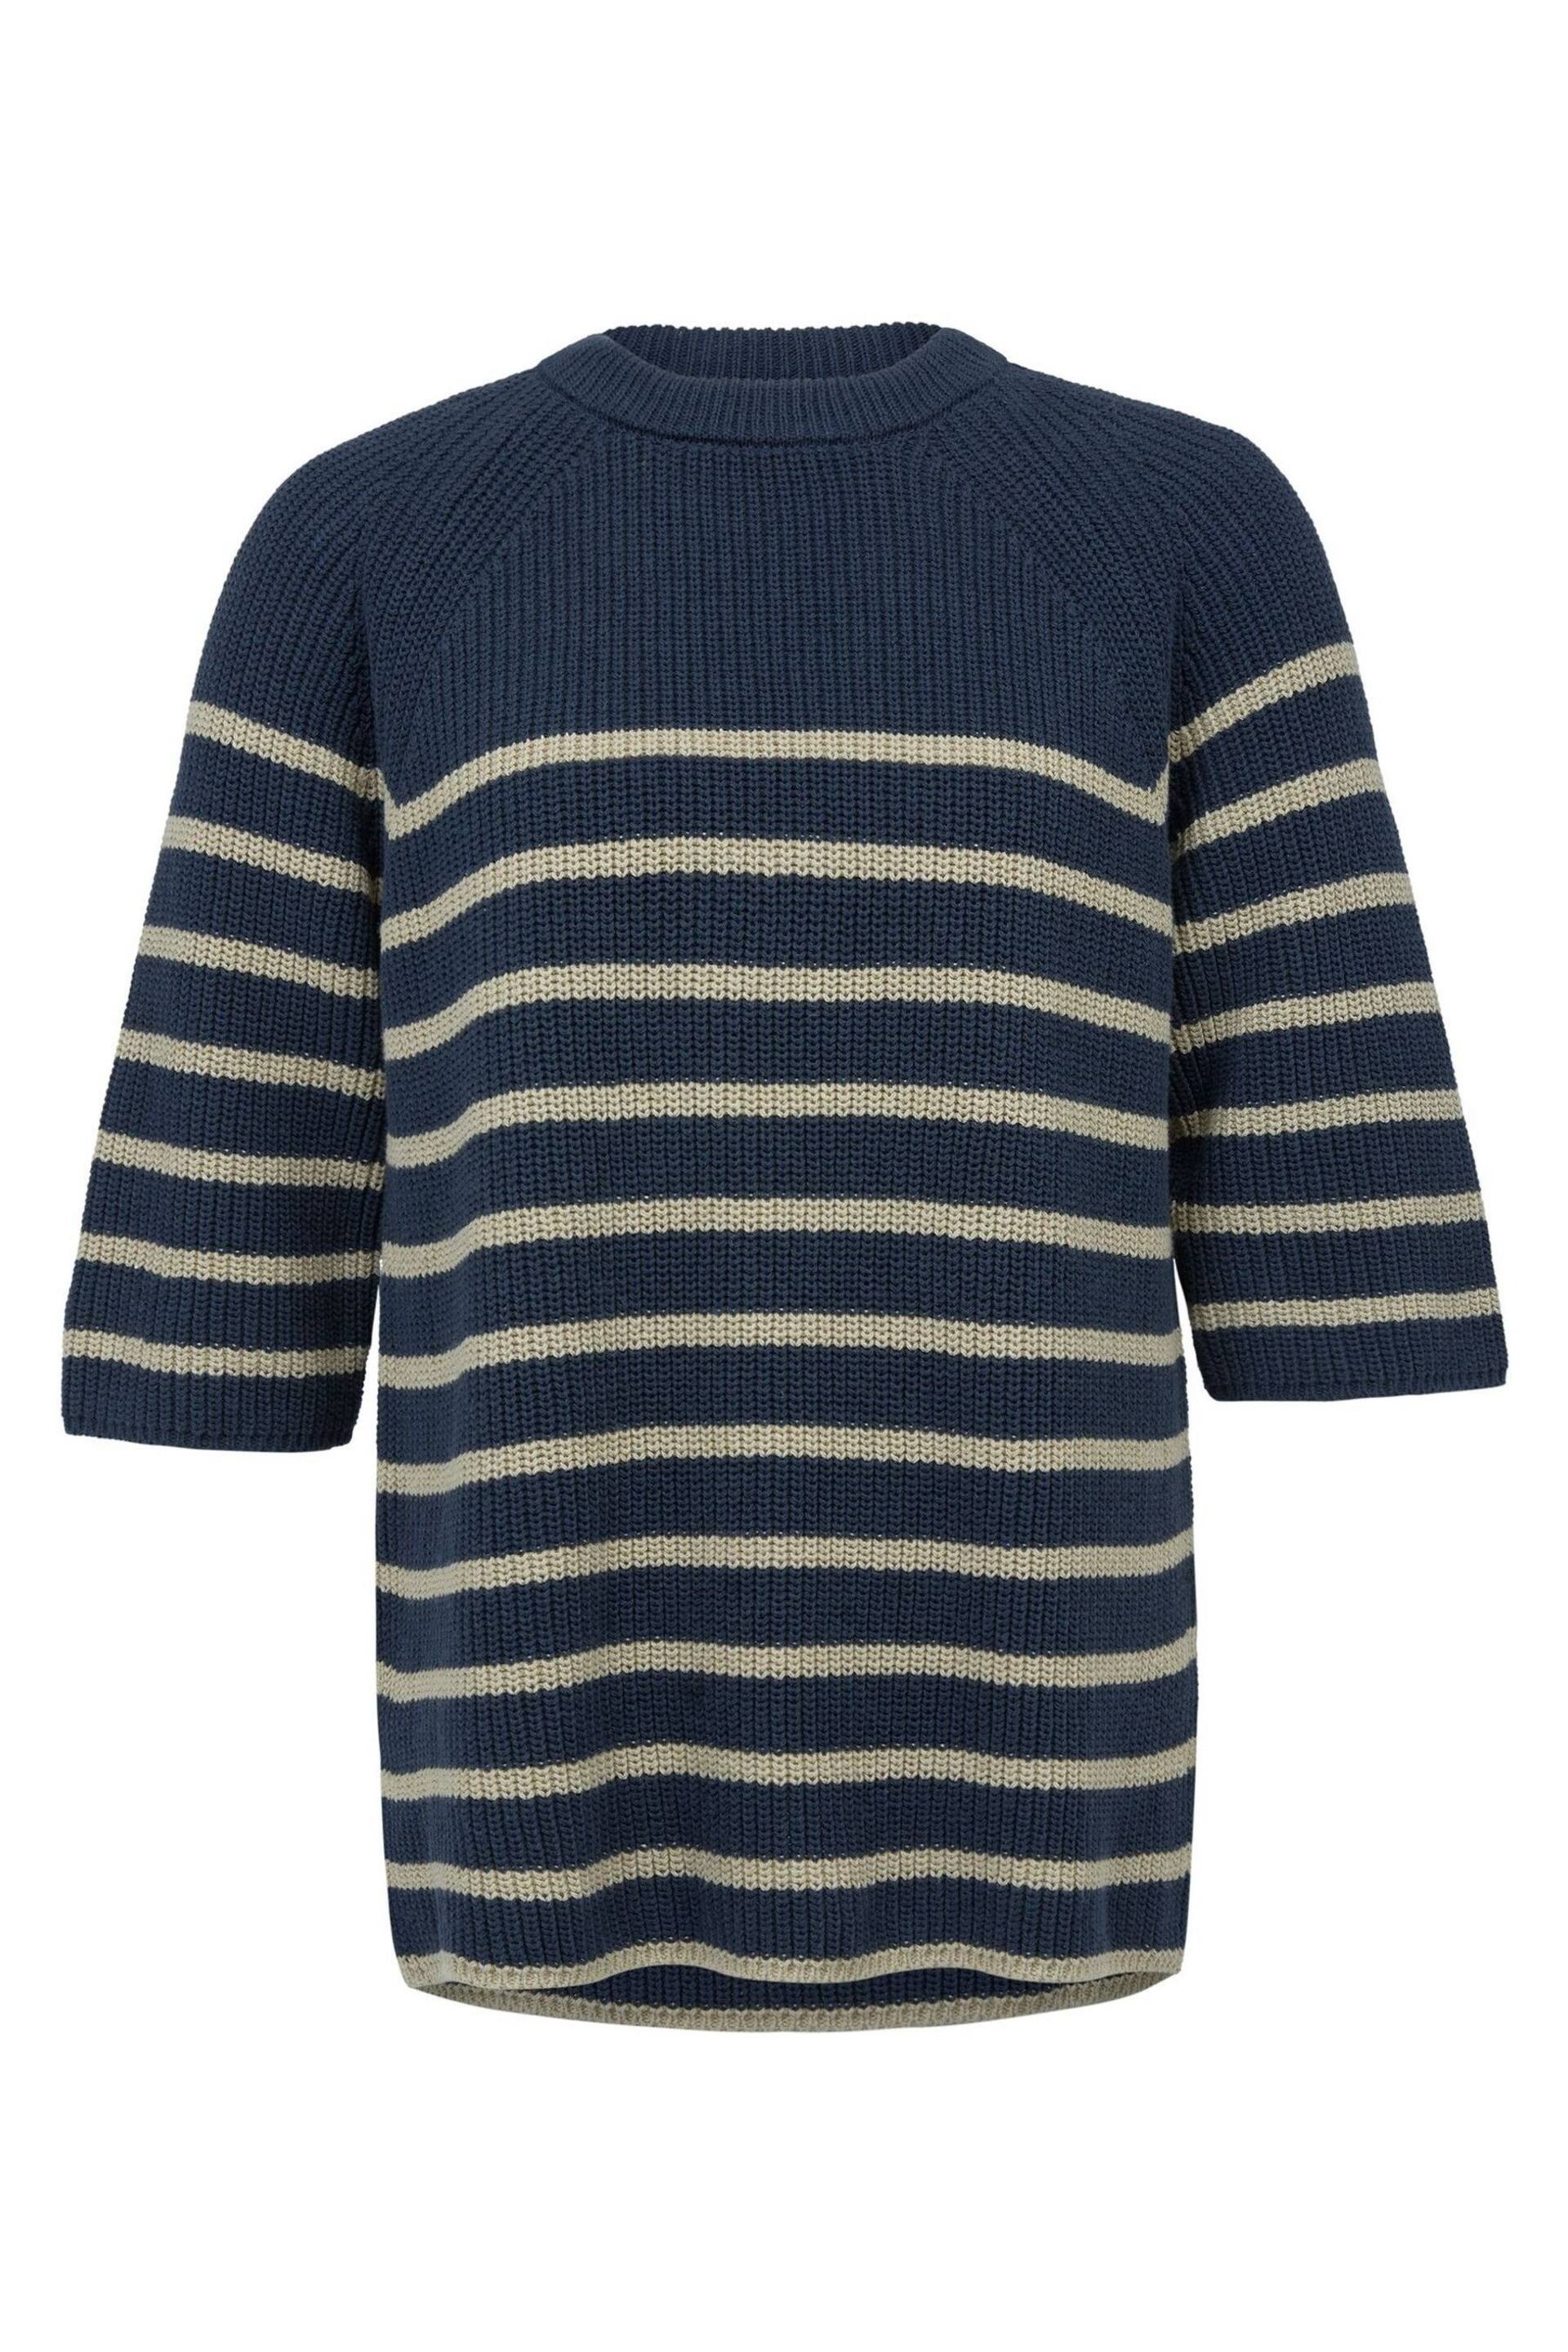 Celtic & Co. Blue Half Sleeve Knitted Jumper - Image 2 of 5